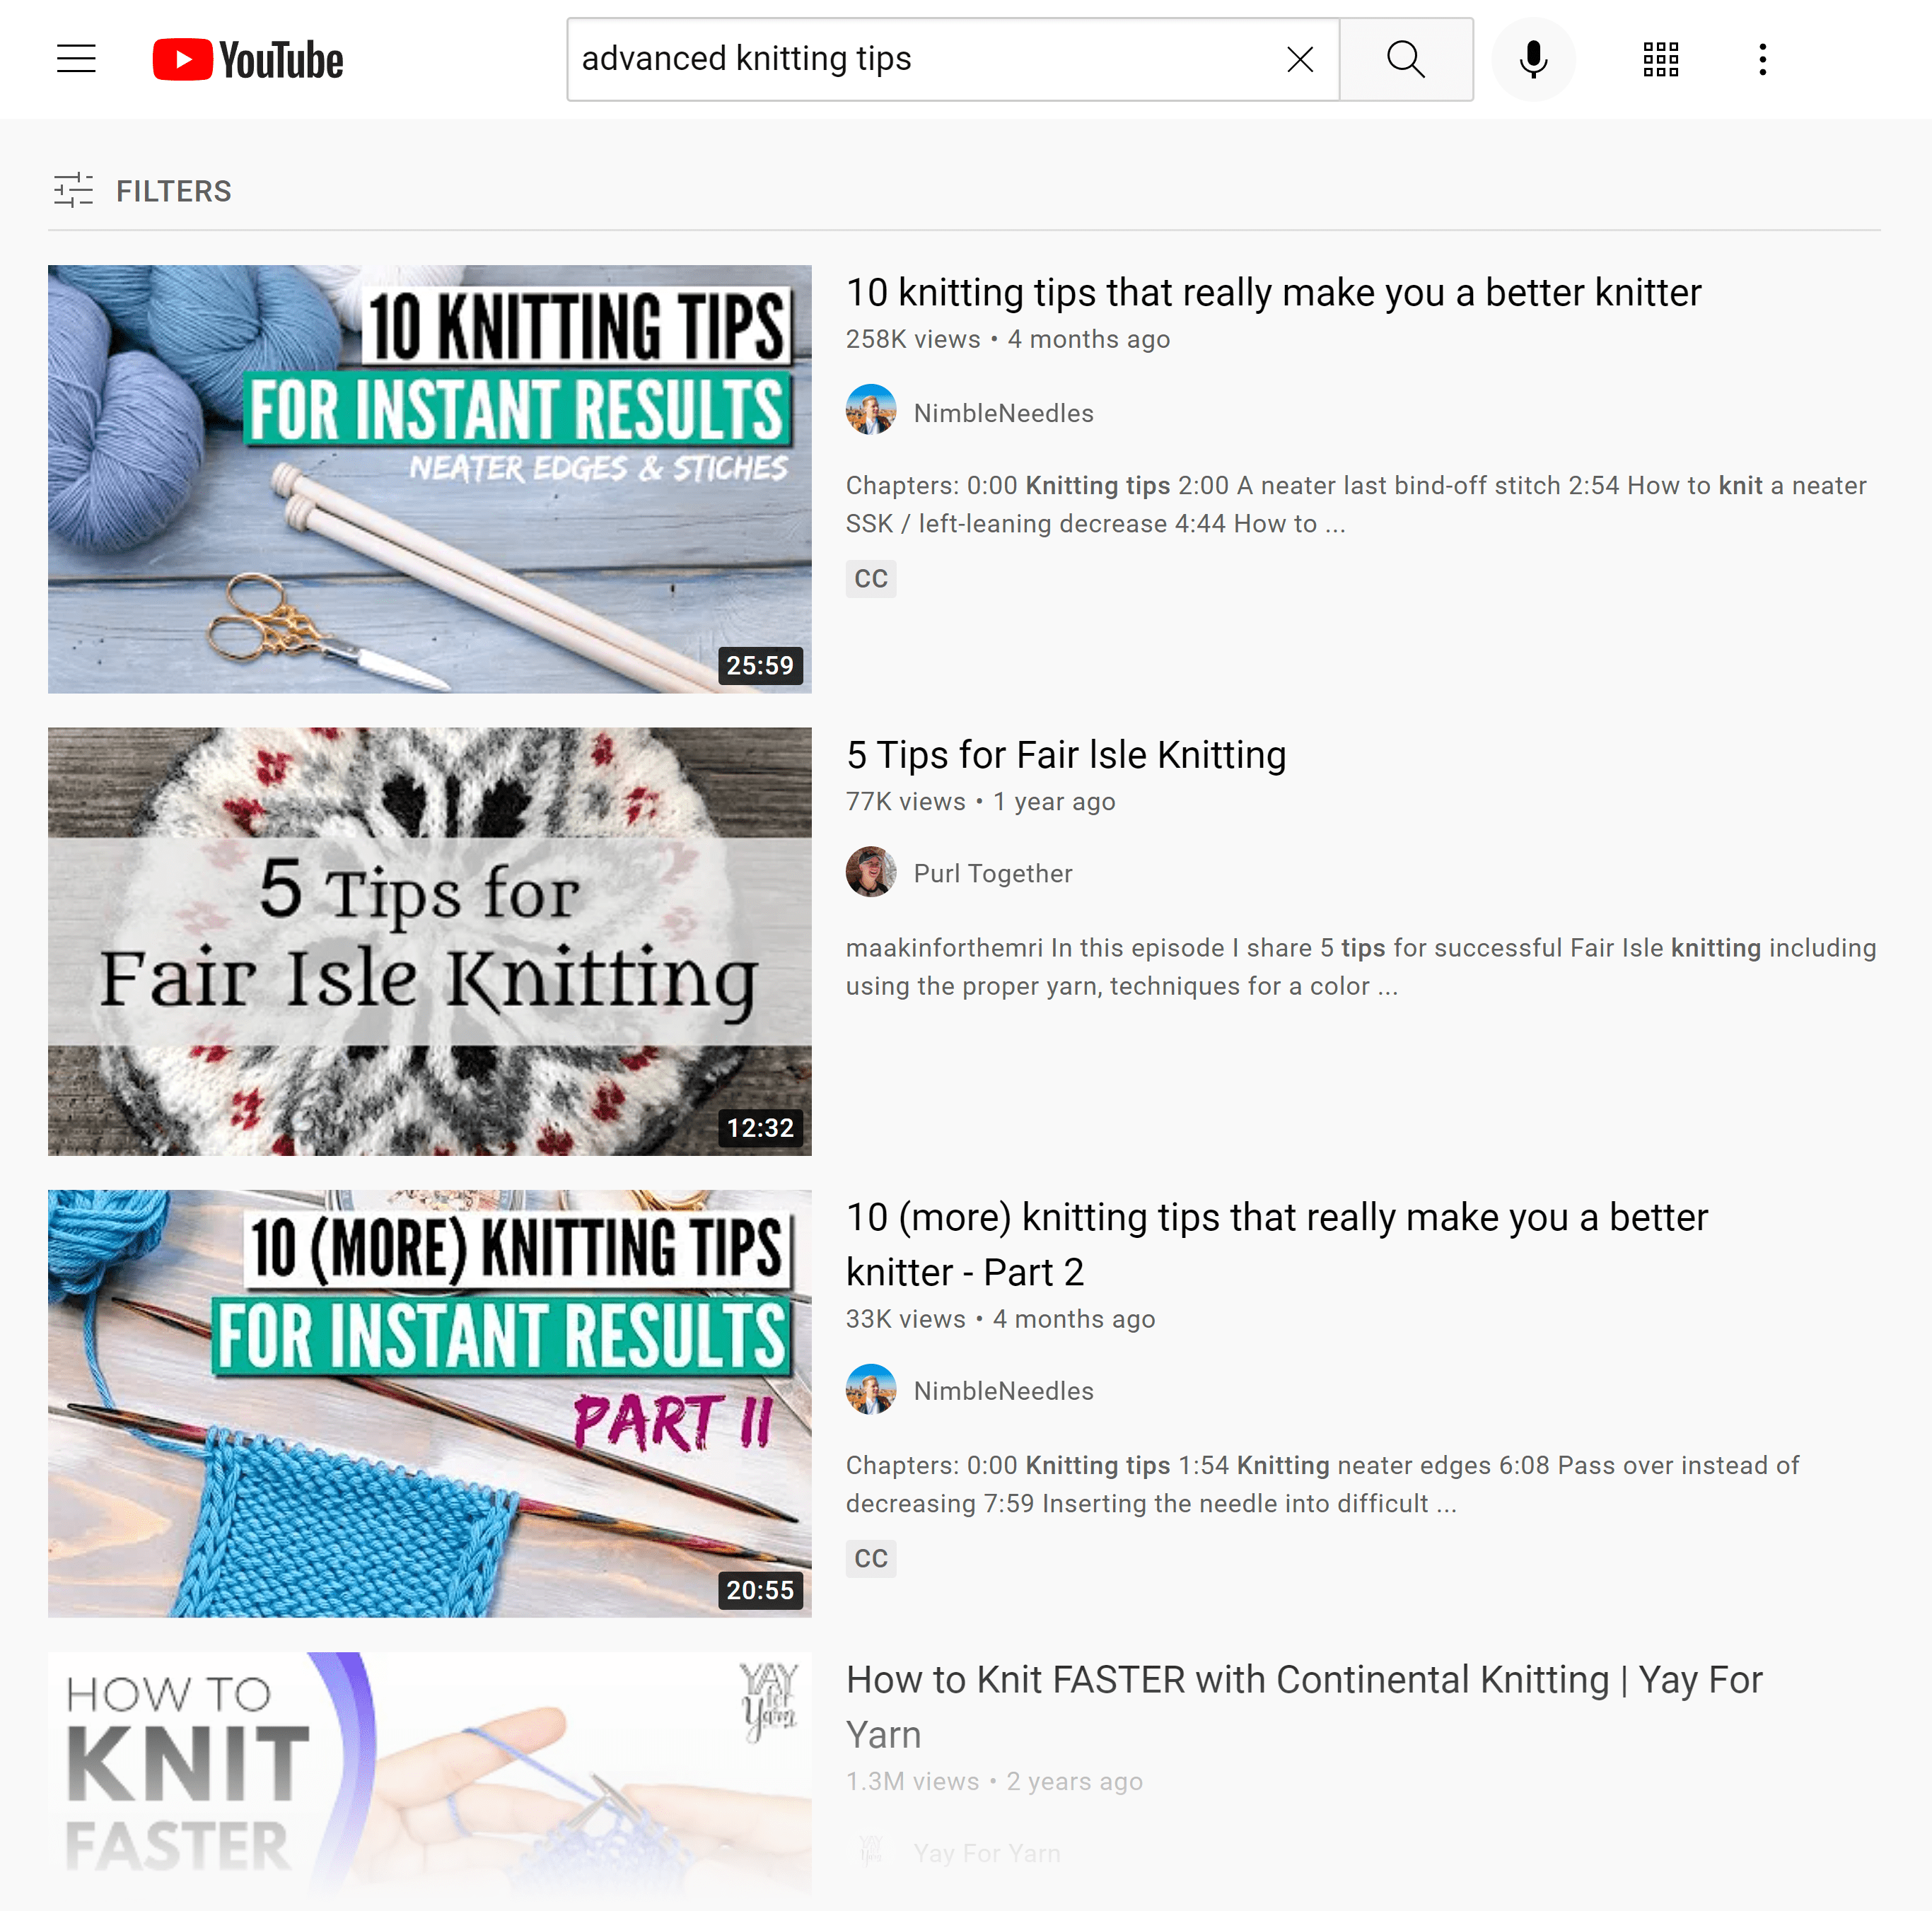 YouTube SERP – Advanced knitting tips